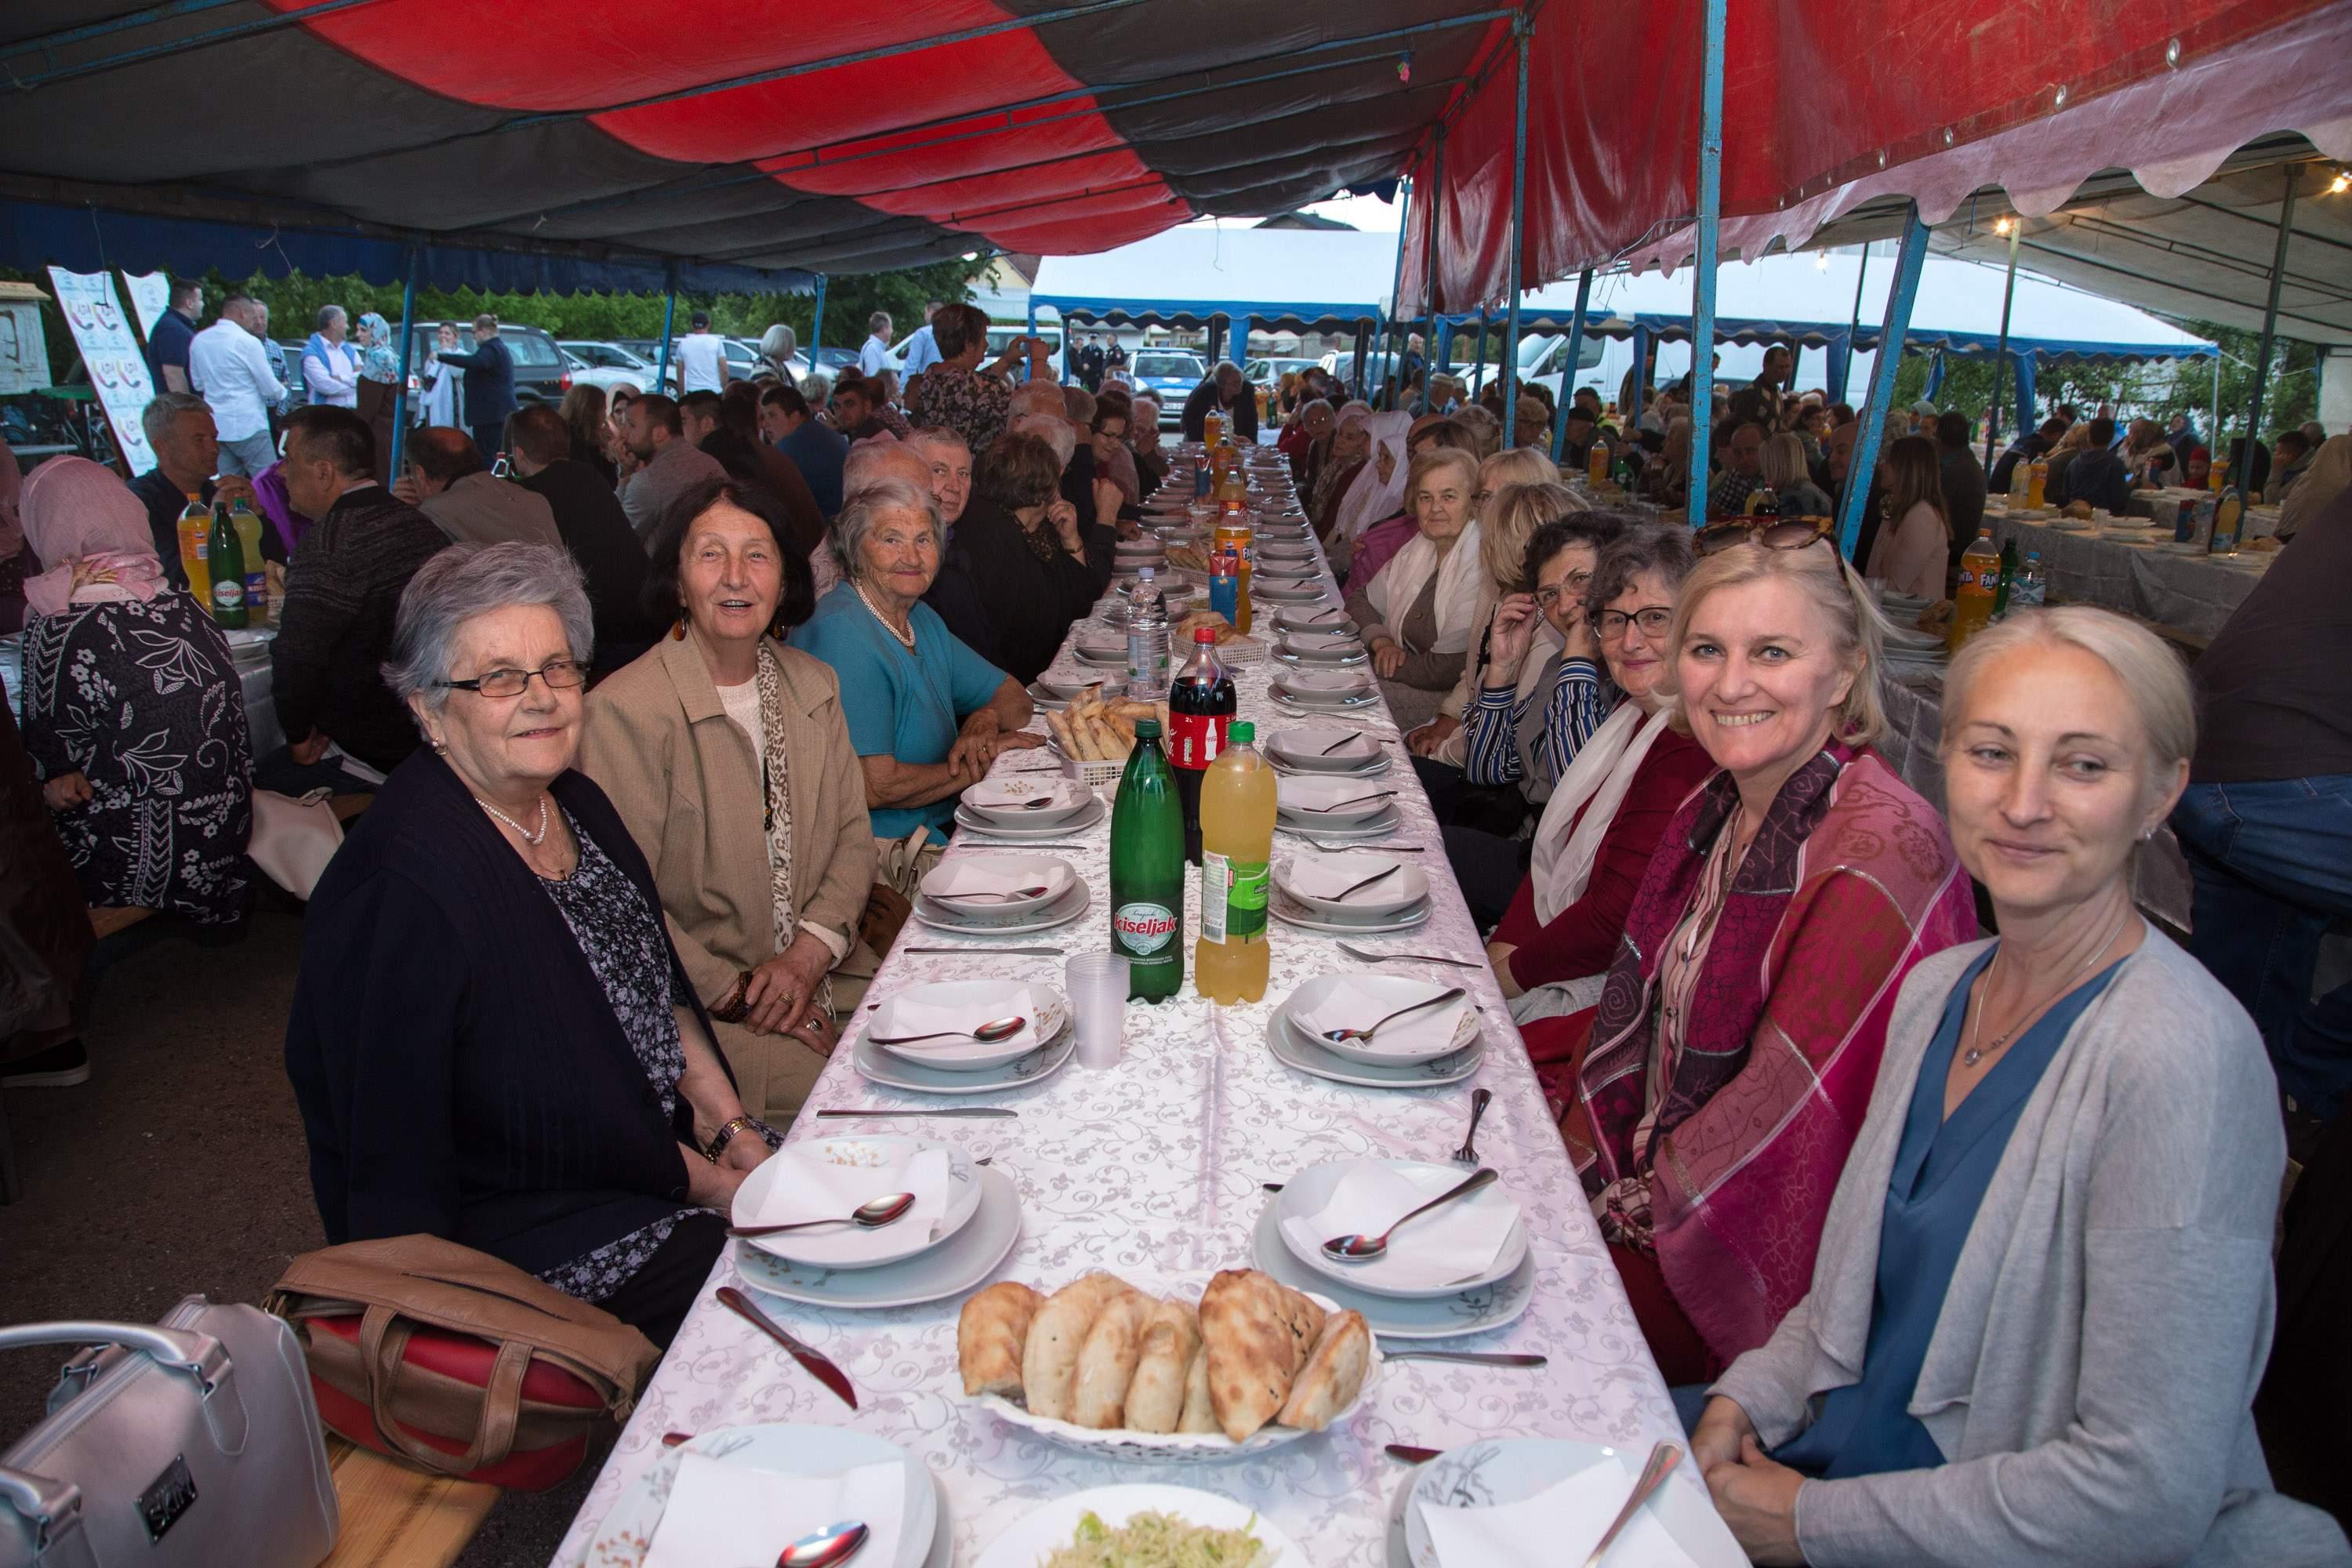 Brojni gosti na iftaru i druženju - Avaz